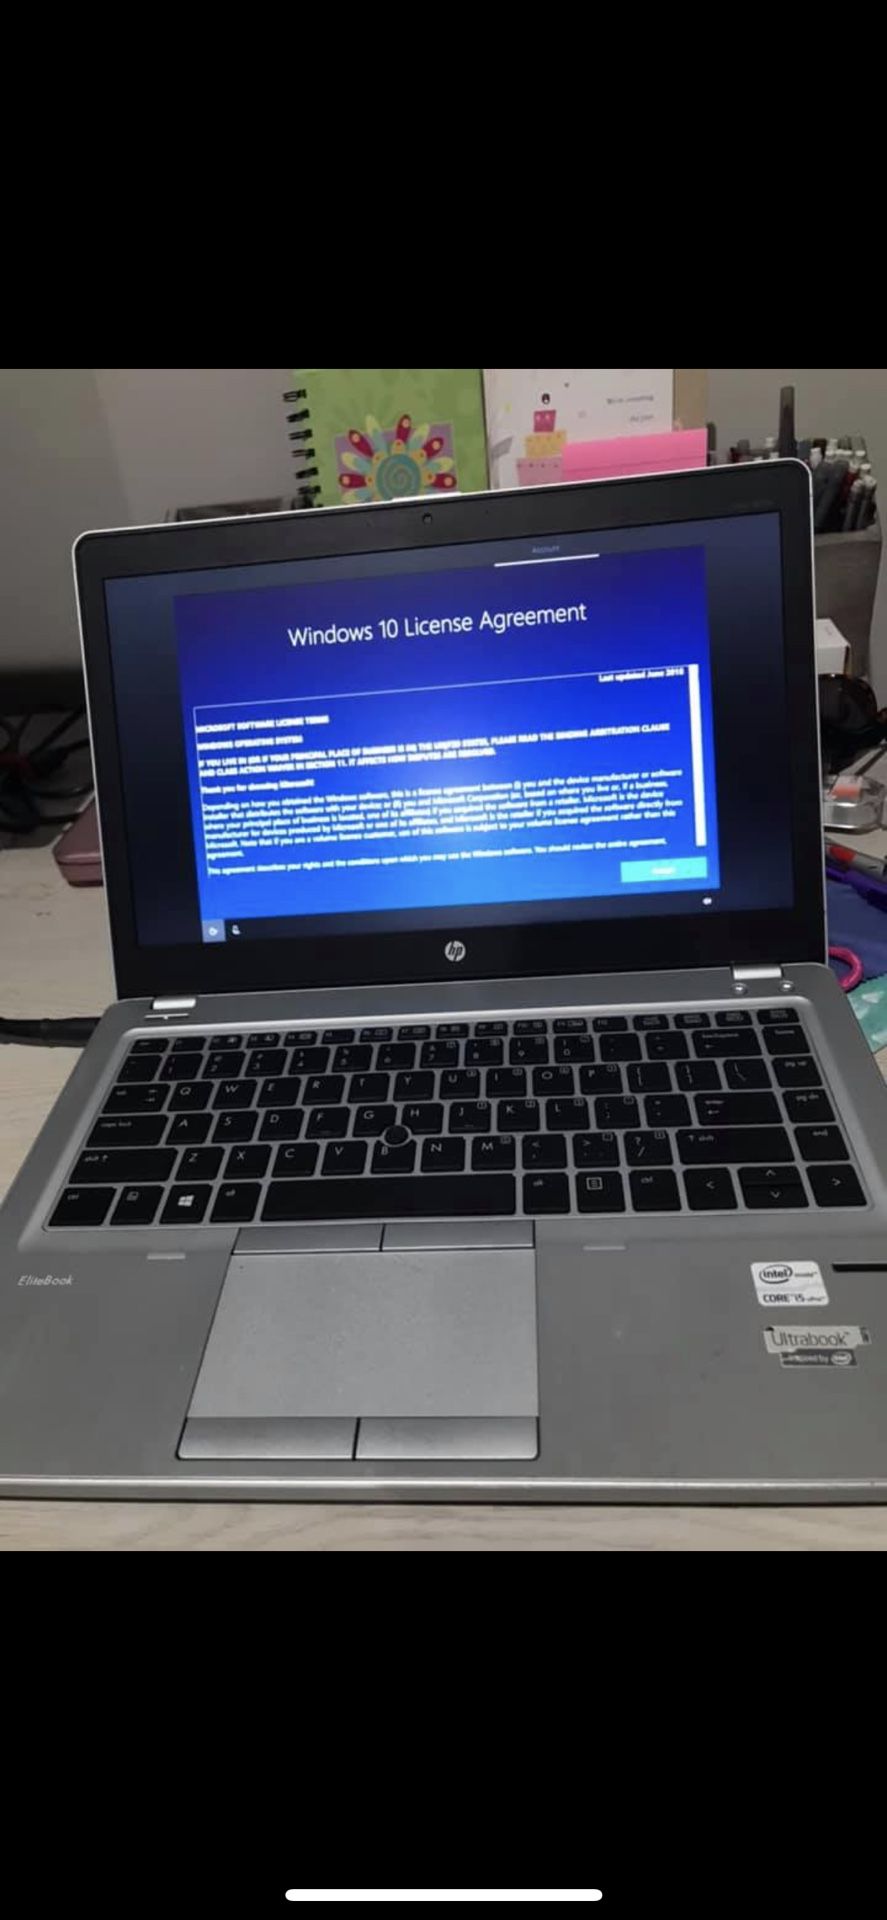 HP Folio 9470M Laptop Windows 10 320GB hard drive